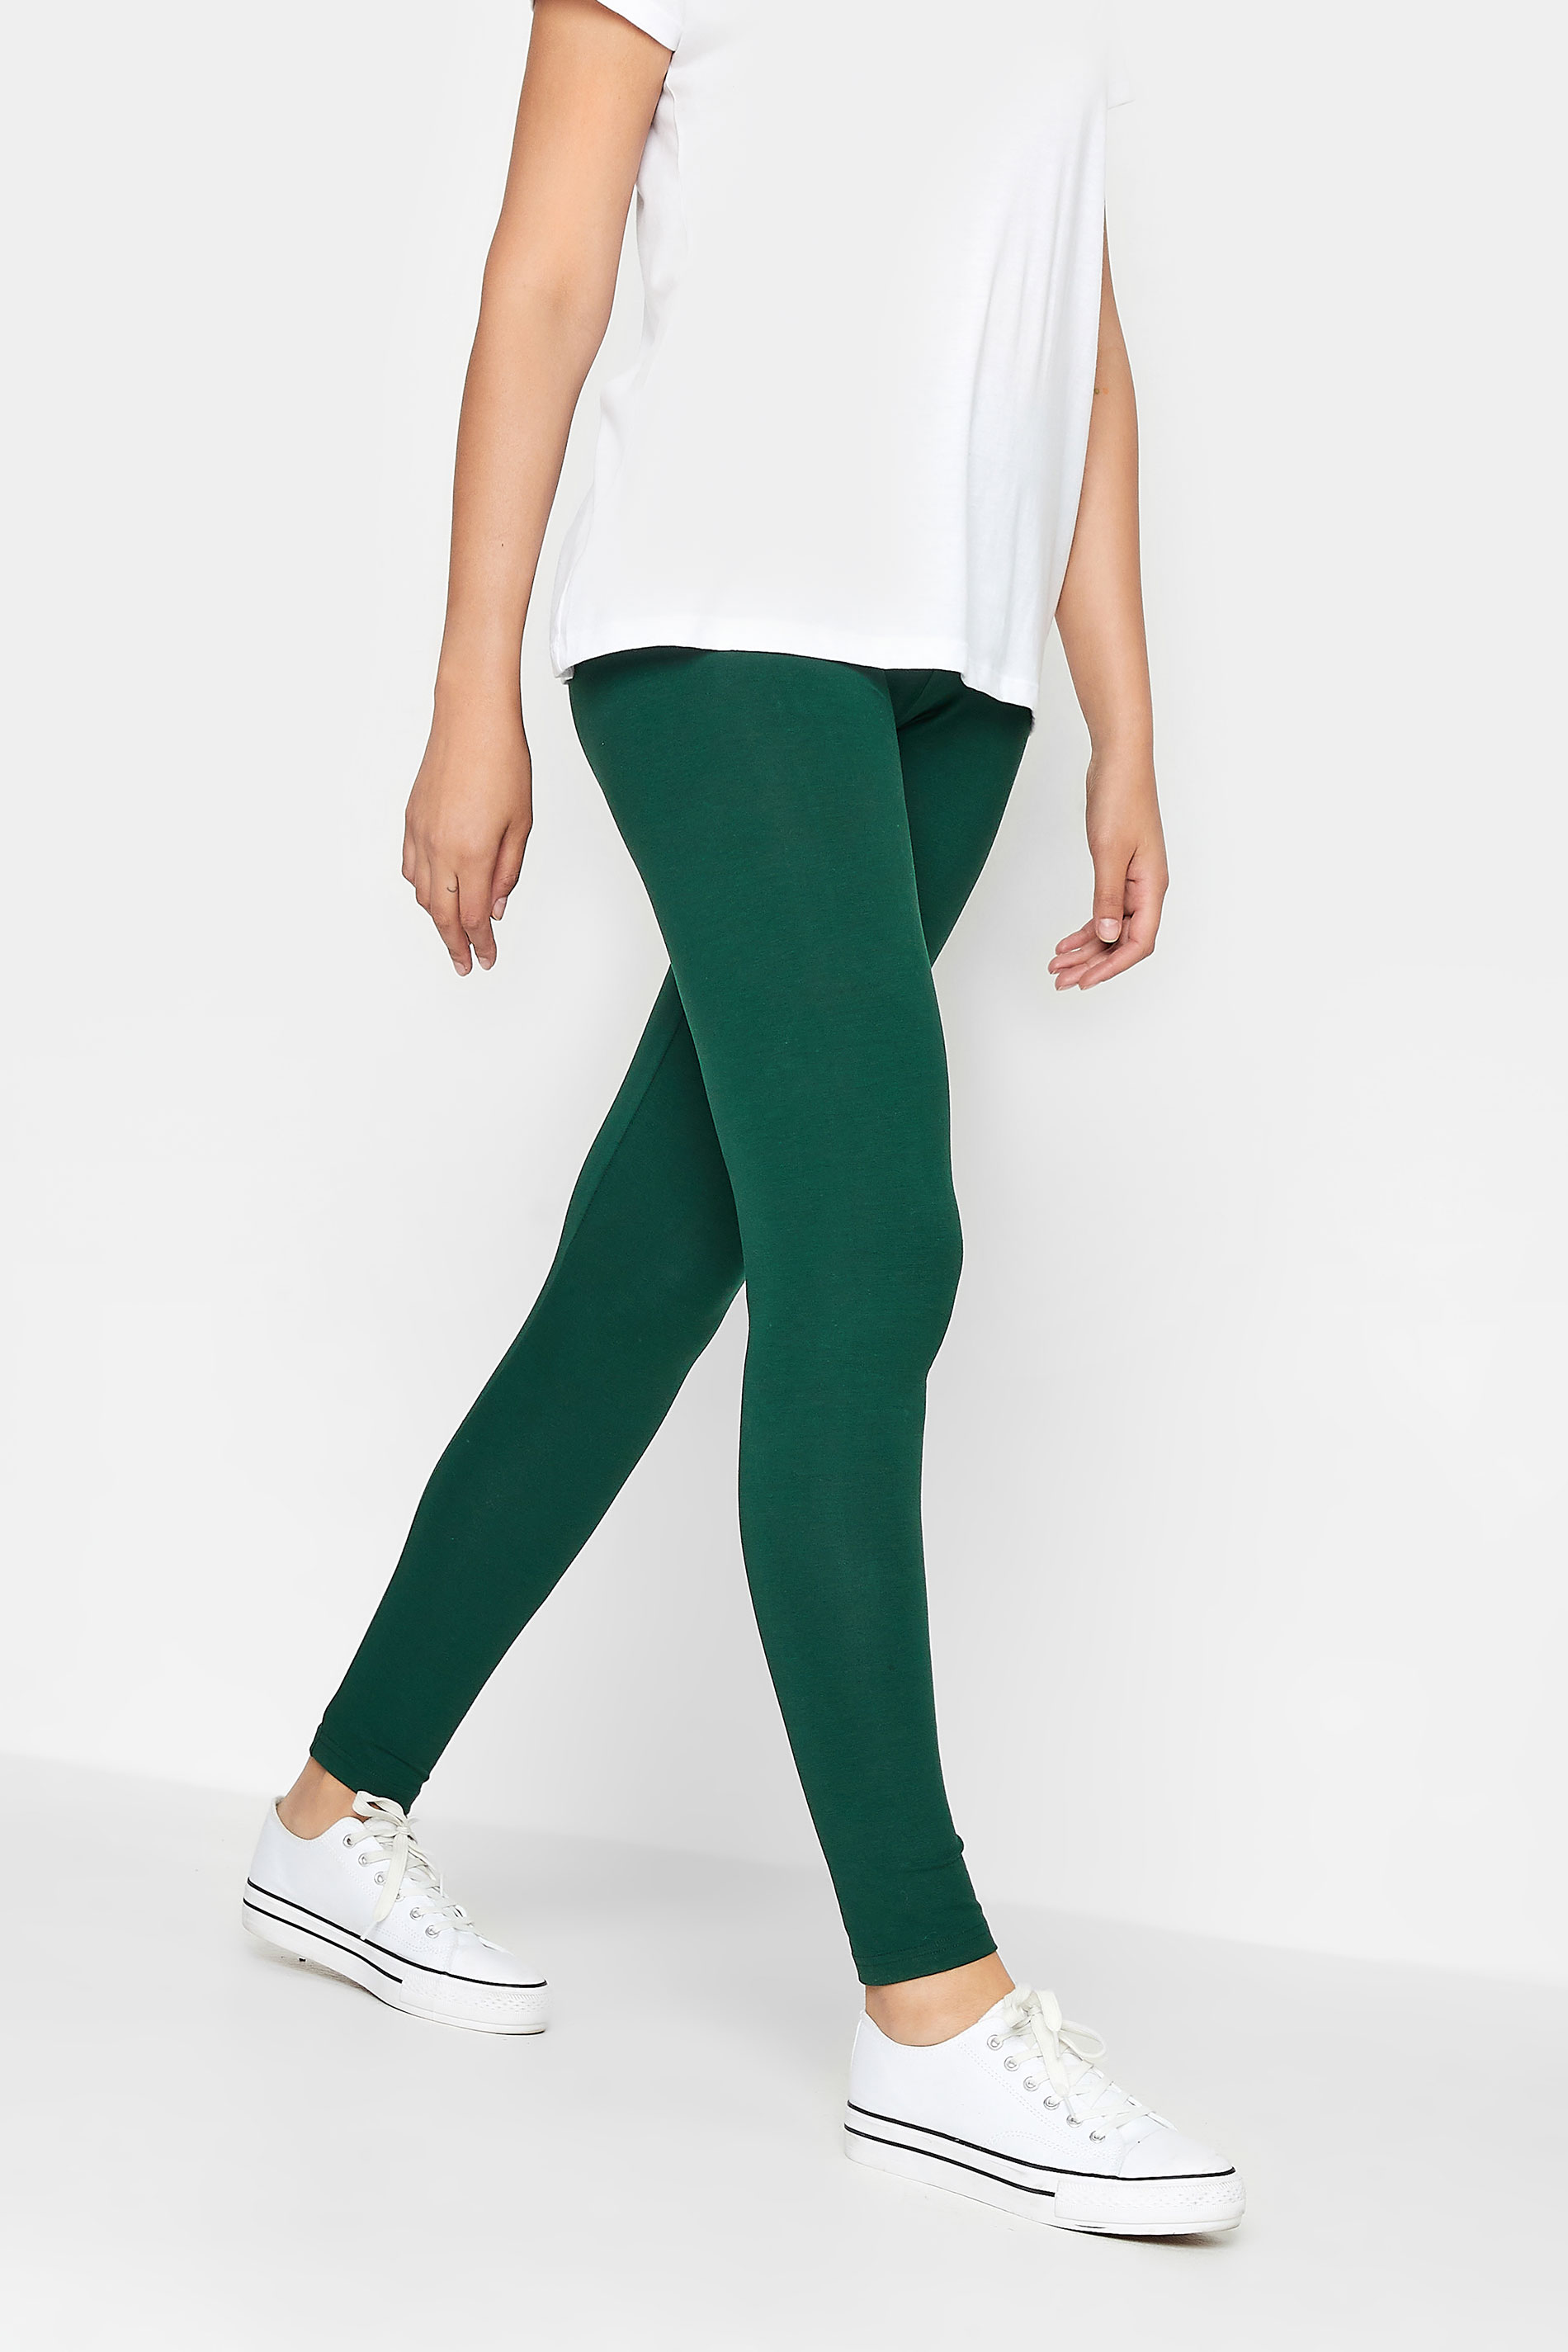 Long Tall Sally - LTS Tall 2 Pack Black & Green Stretch Cotton Leggings -  Women's : : Fashion